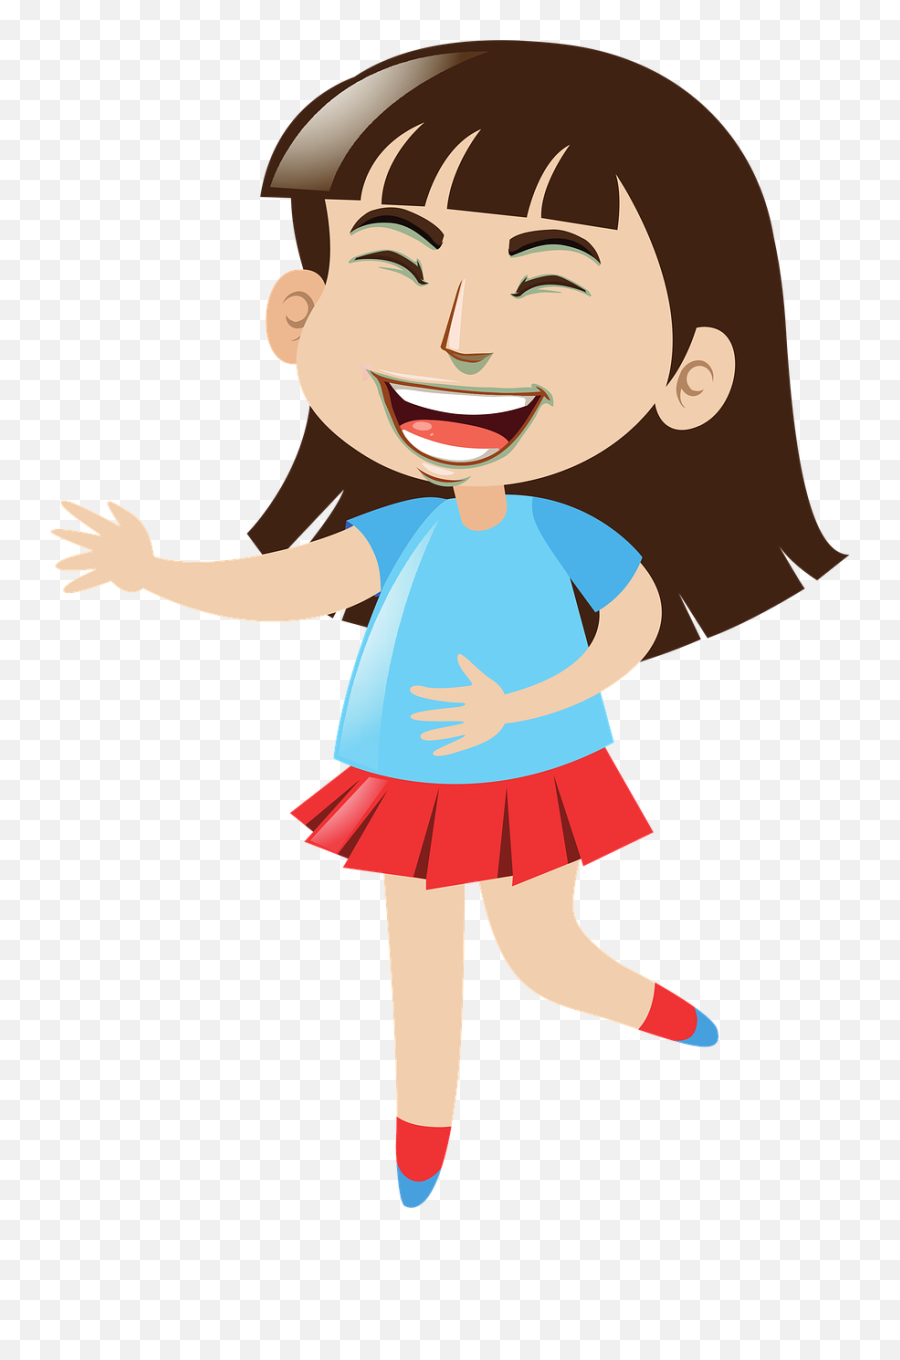 Laughing Girl Cartoon - Free Image On Pixabay Girl Laughing Cartoon Png,Laughing Png